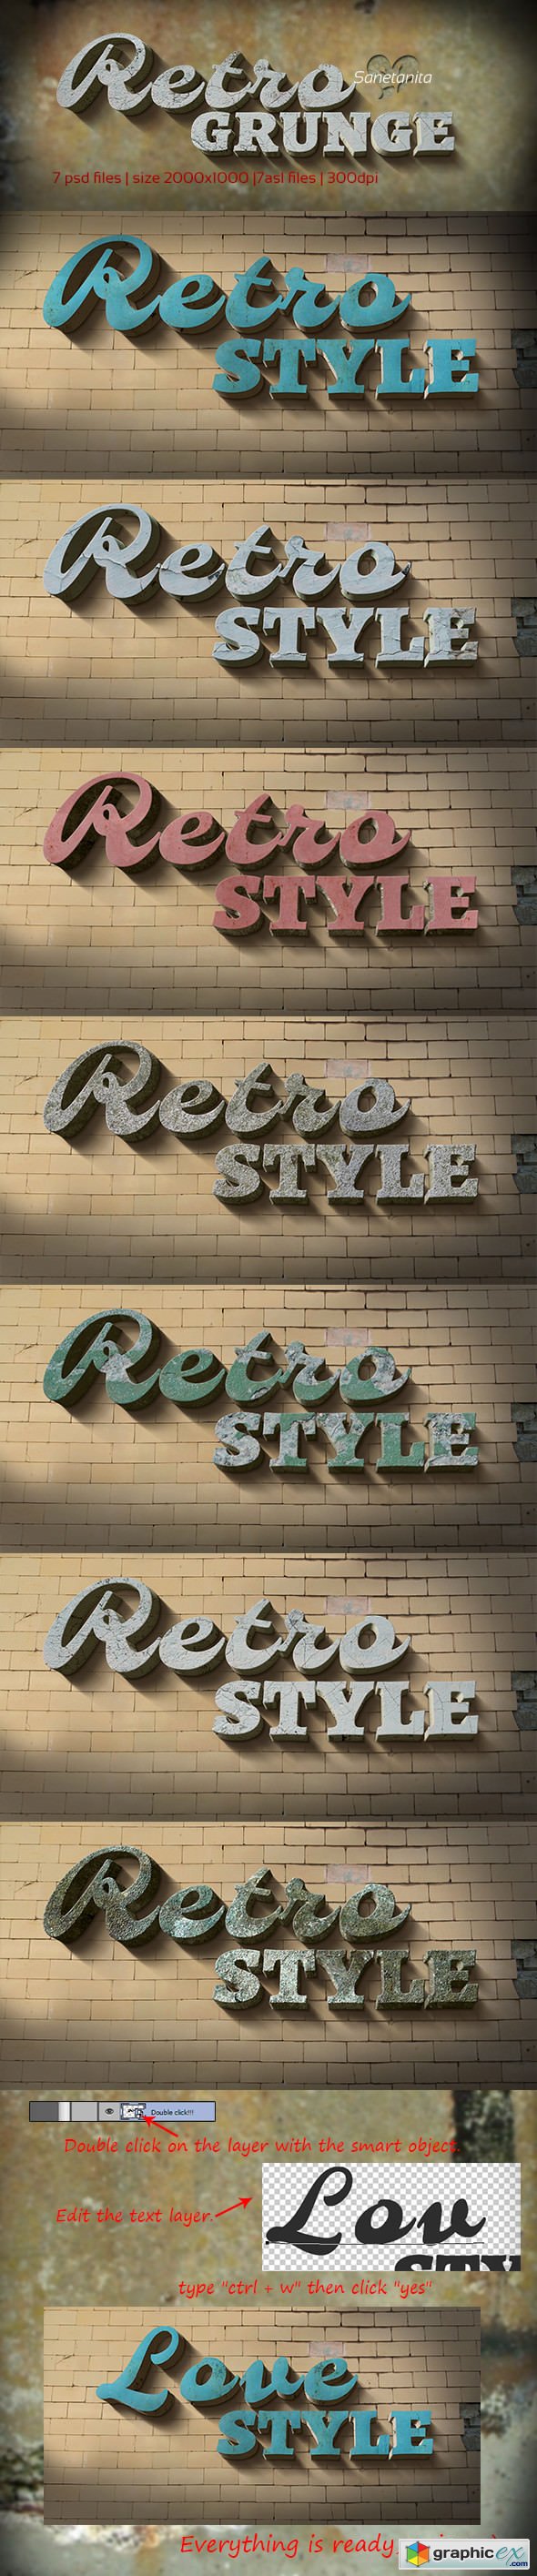 3D Retro Grunge Styles